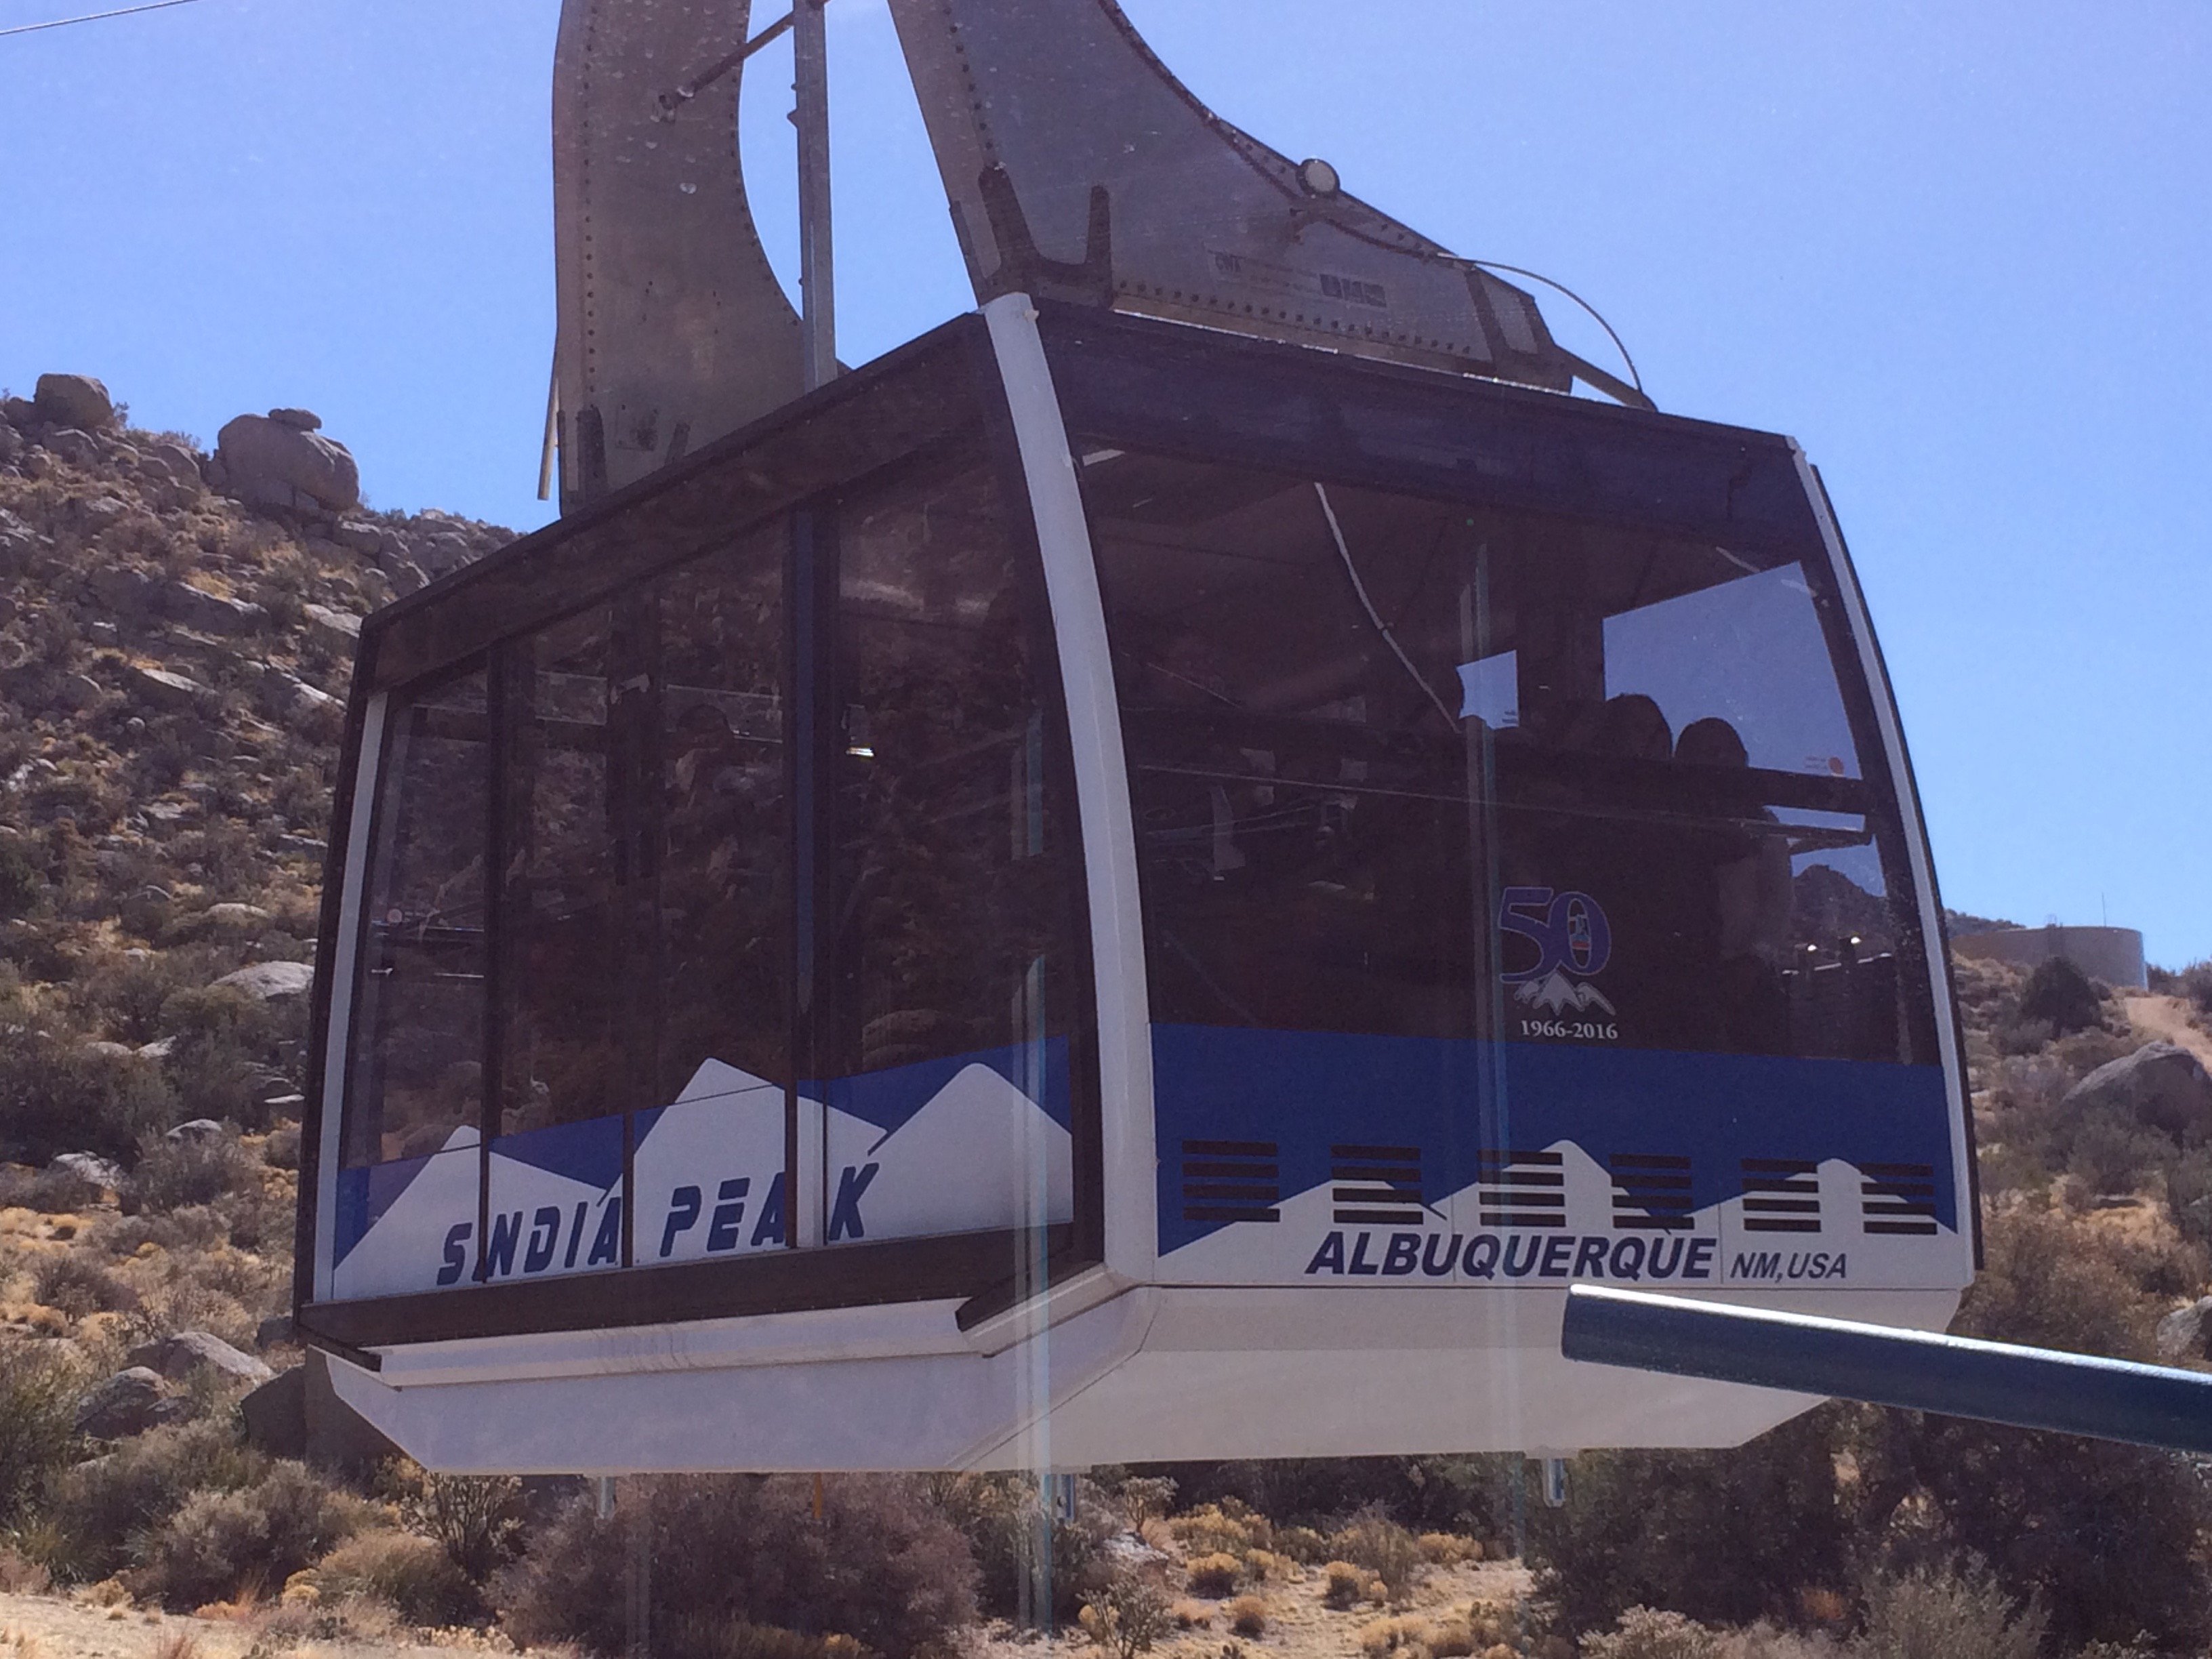 Taking a Ride on the Sandia Peak Aerial Tramway in Albuquerque